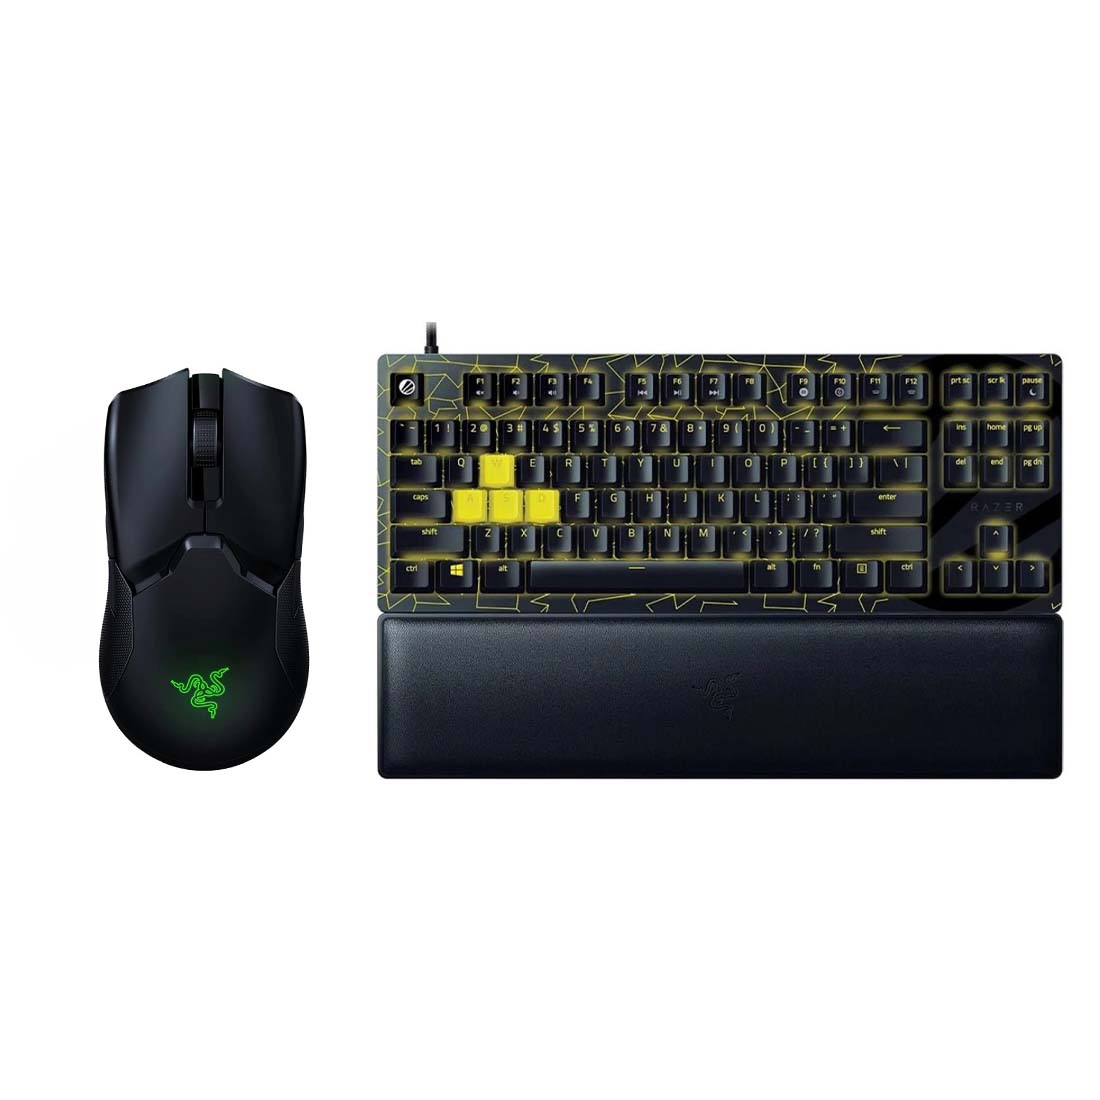 (Pre-Owned) Razer Huntsman V2 Keyboard - ESL Edition & Razer Viper Ultimate Mouse - لوحة مفاتيح و فأرة مستعملين - Store 974 | ستور ٩٧٤